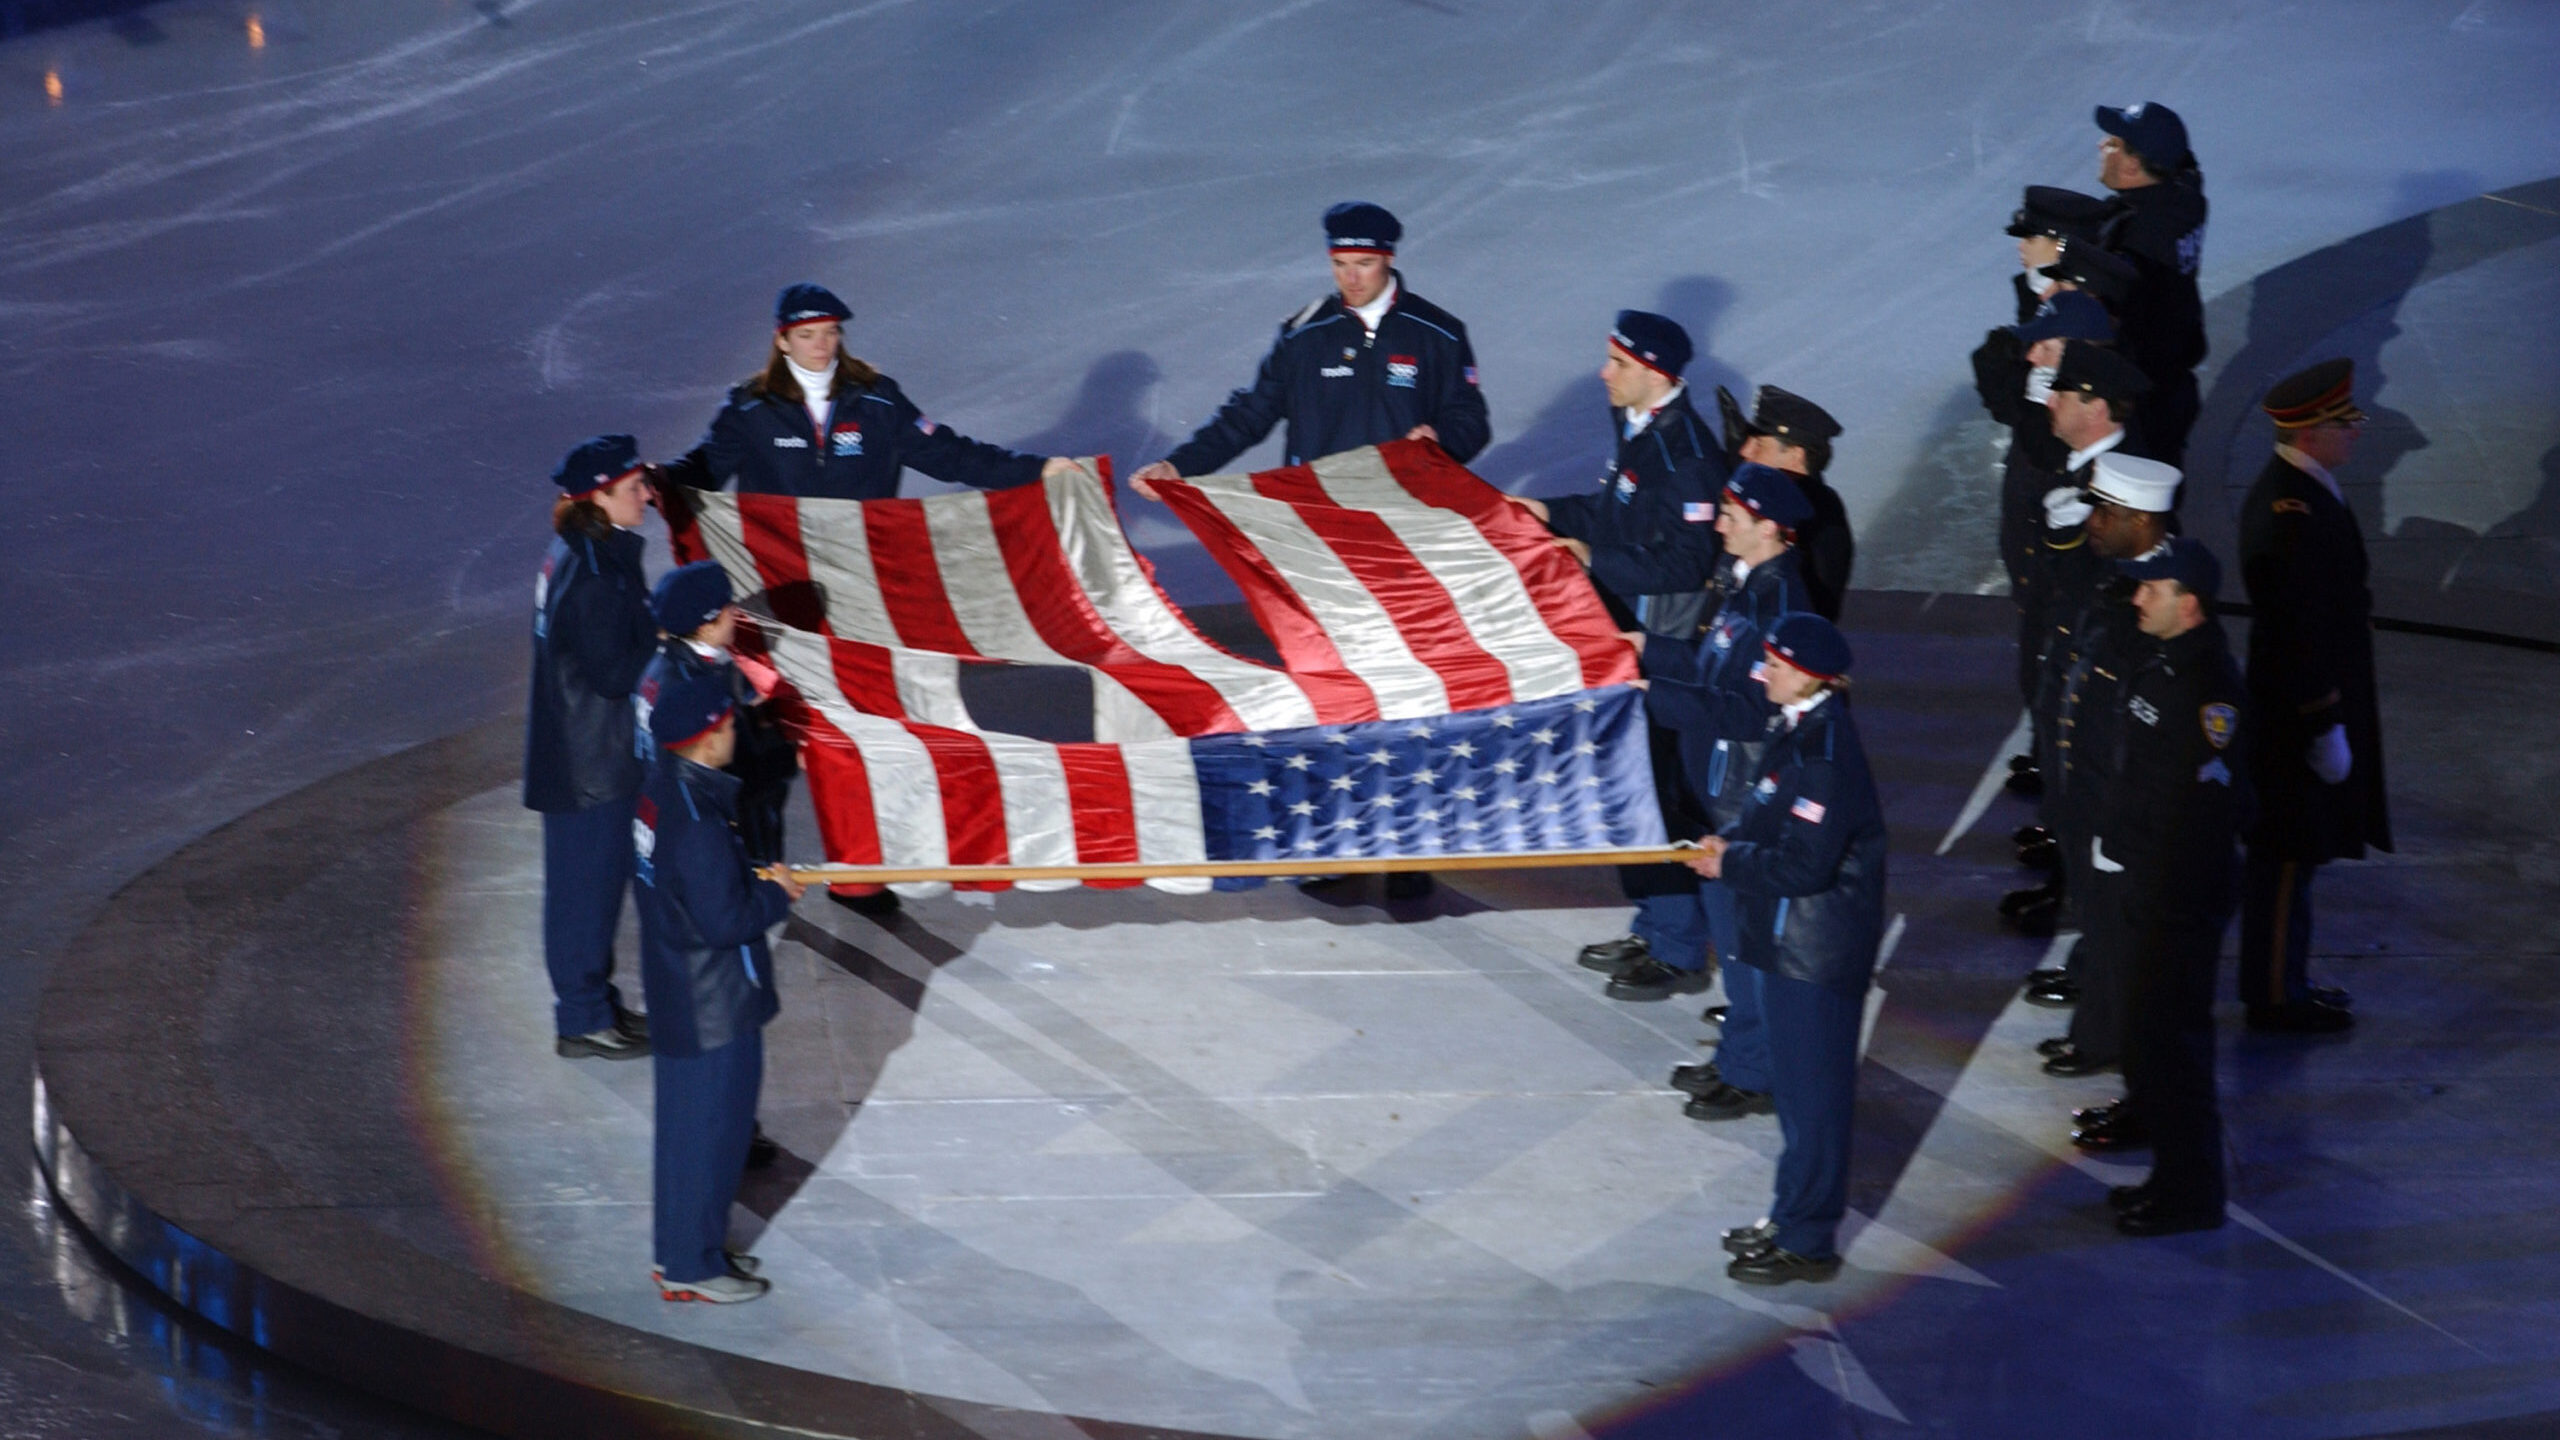 9/11 flag at salt lake 2002 opening ceremony. Winter Games...